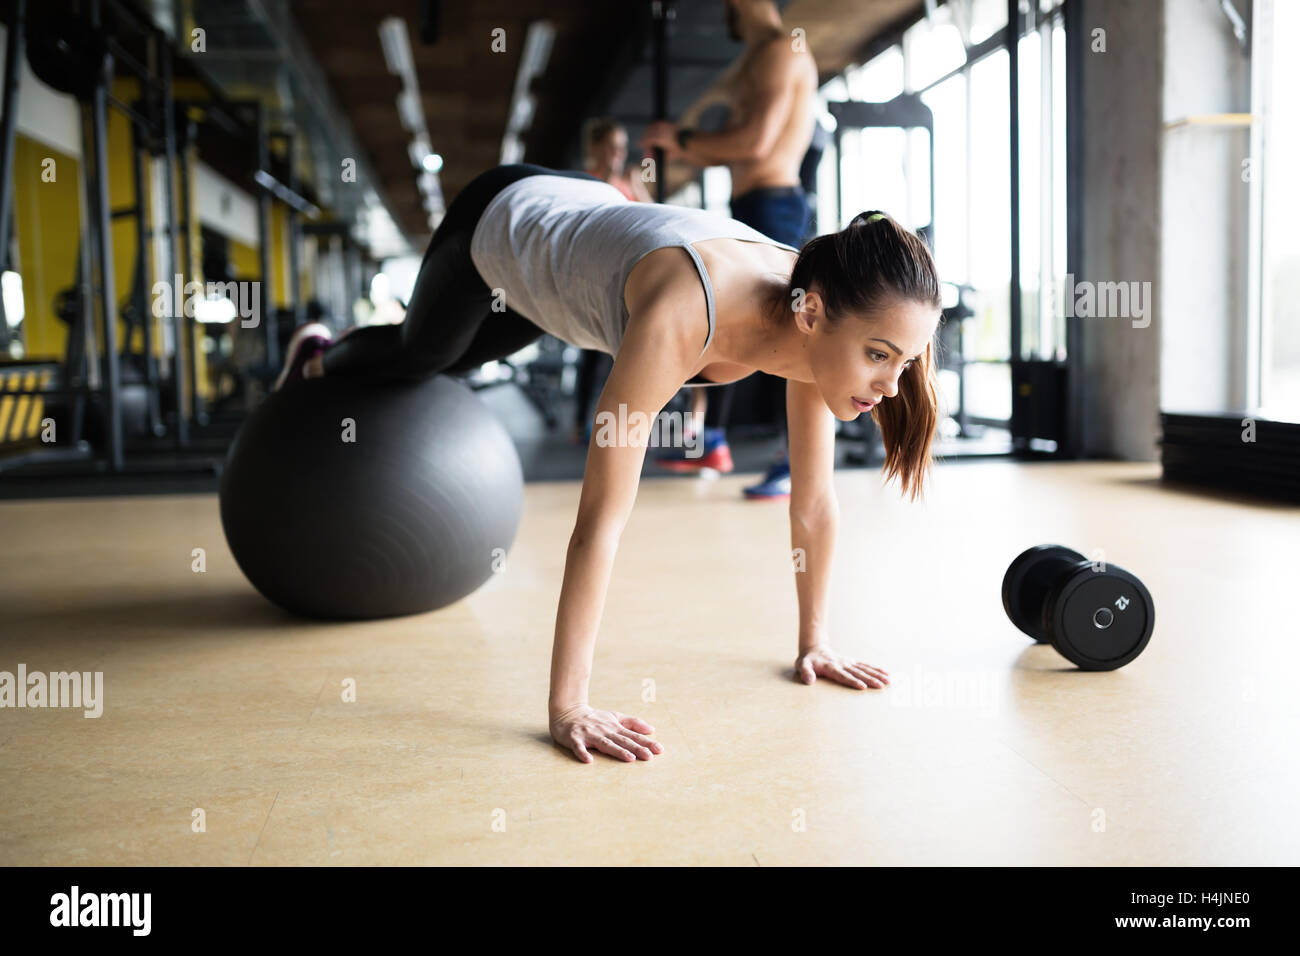 Sportliche Frau mit Ball im Fitness-Studio trainieren Stockfoto